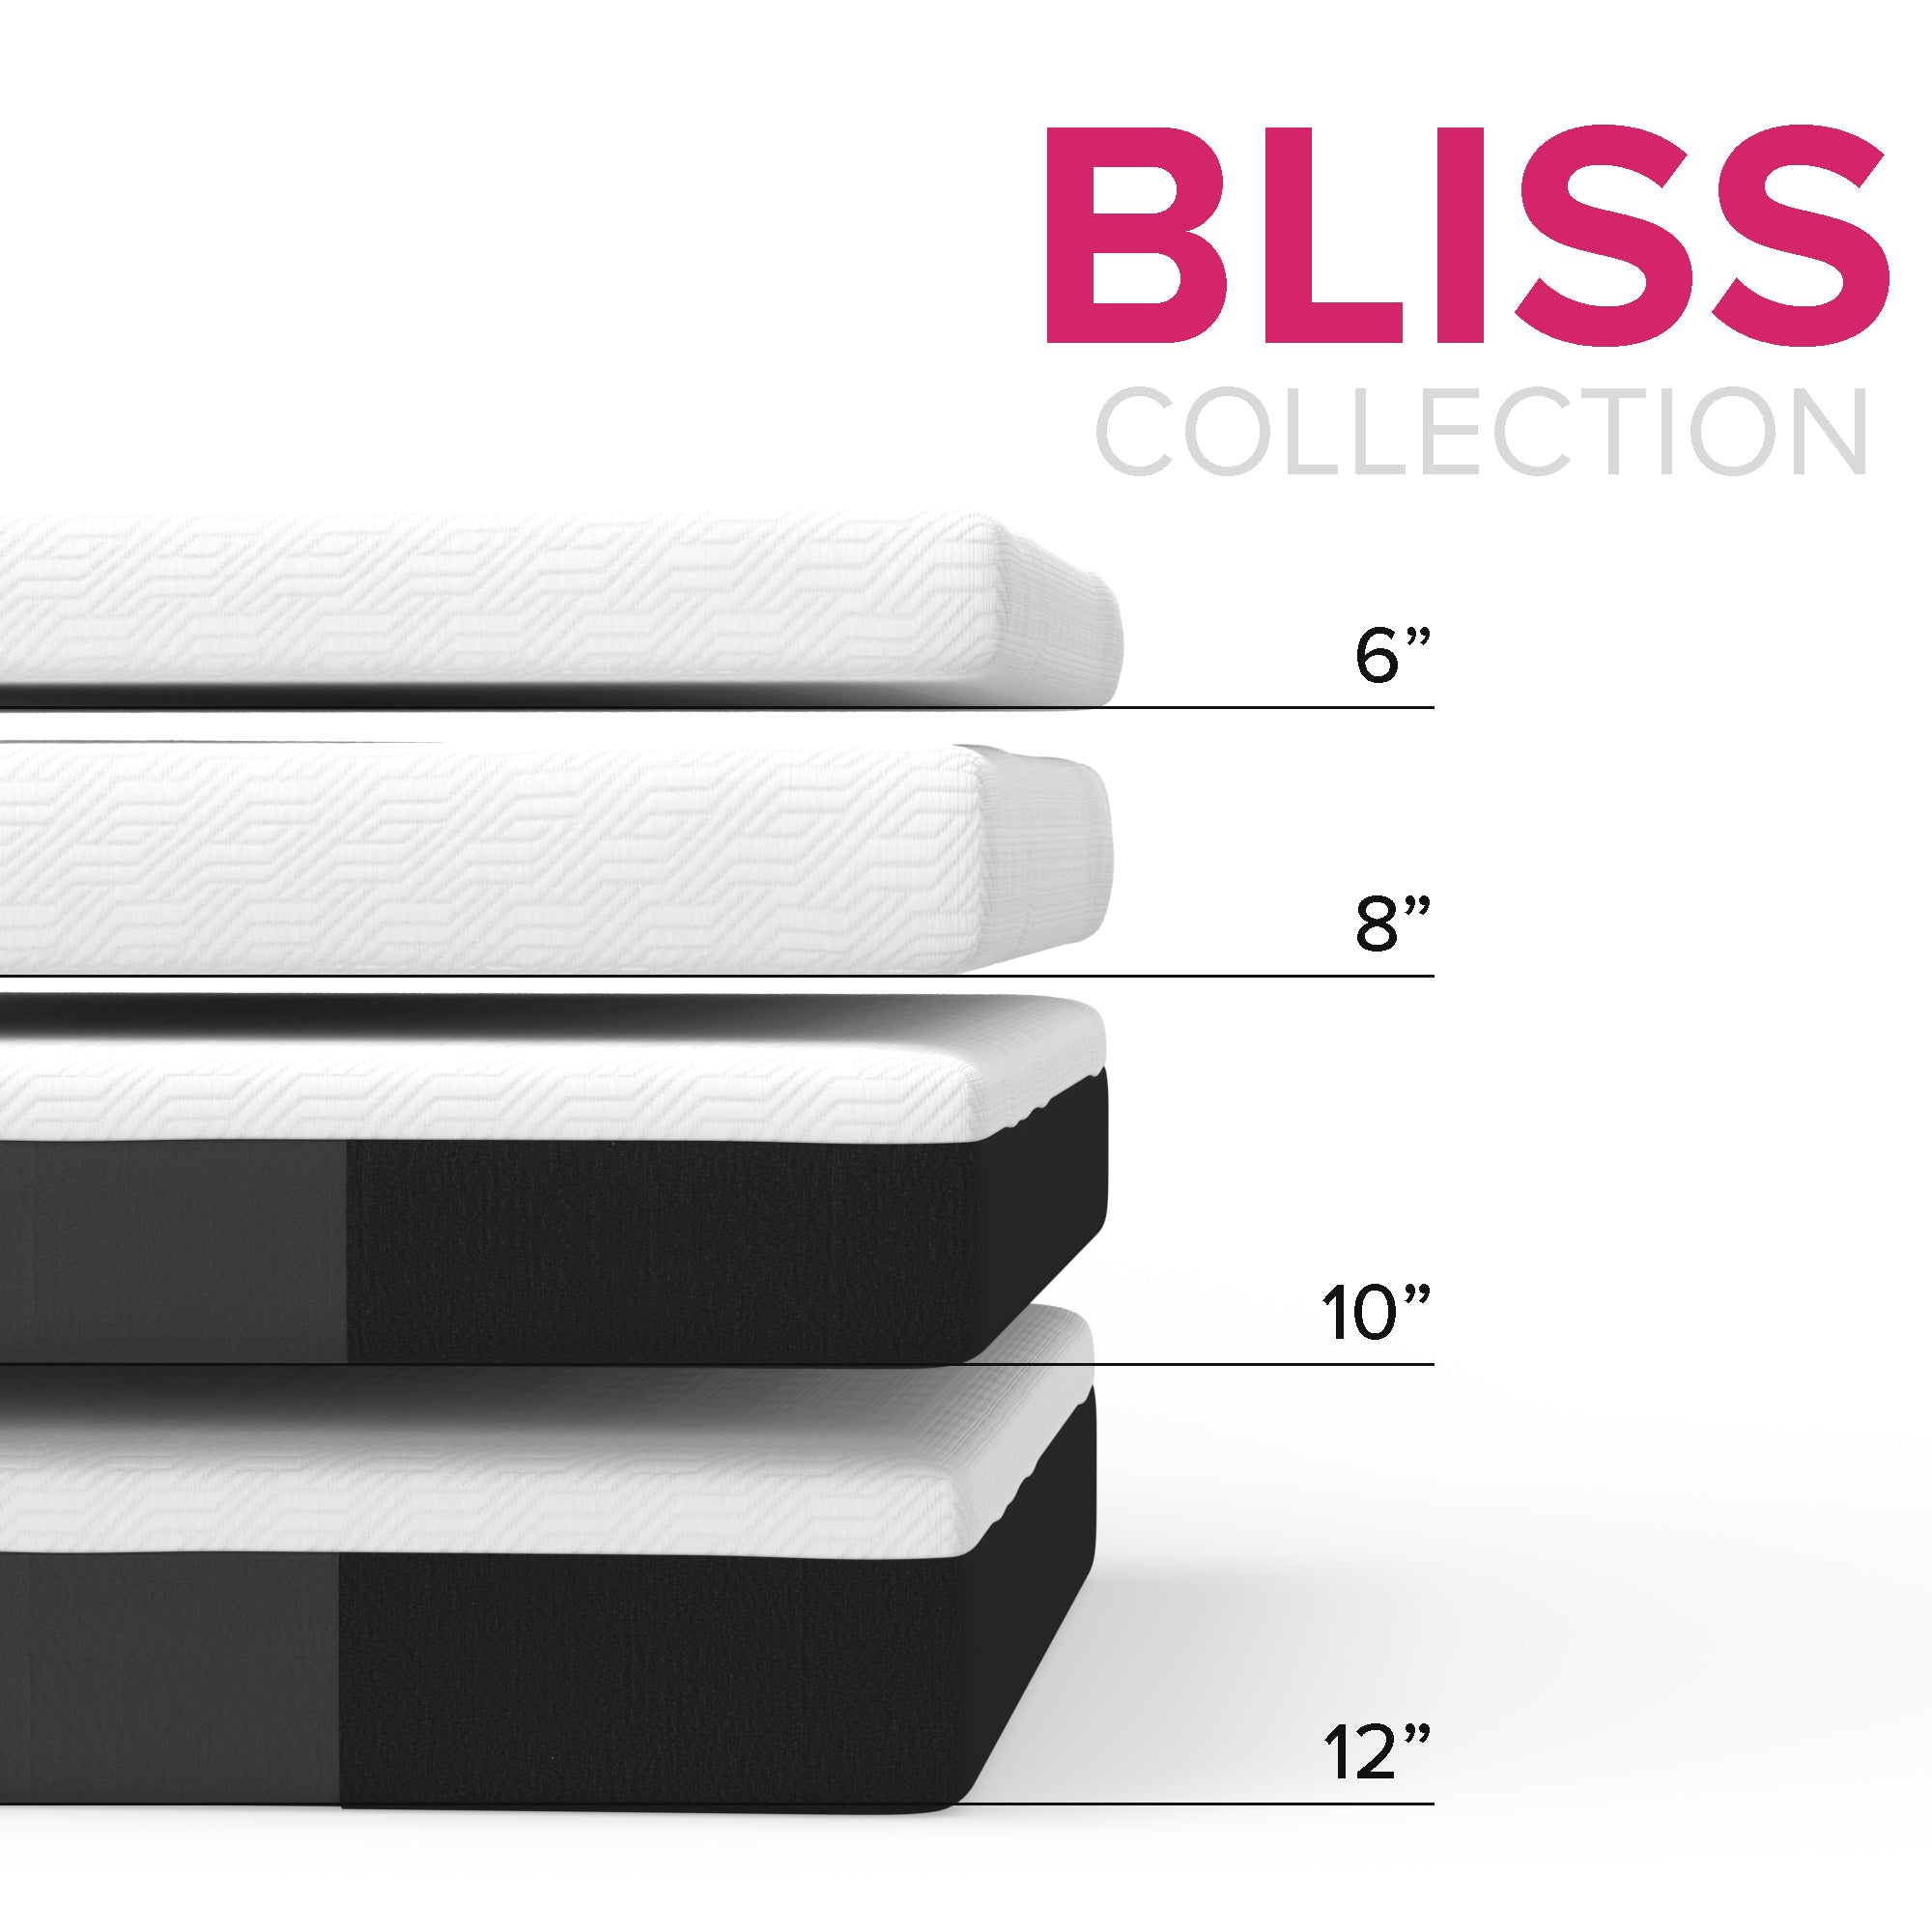 6” Bliss Gel Memory Foam Mattress - Firm - BlissfulNights.com